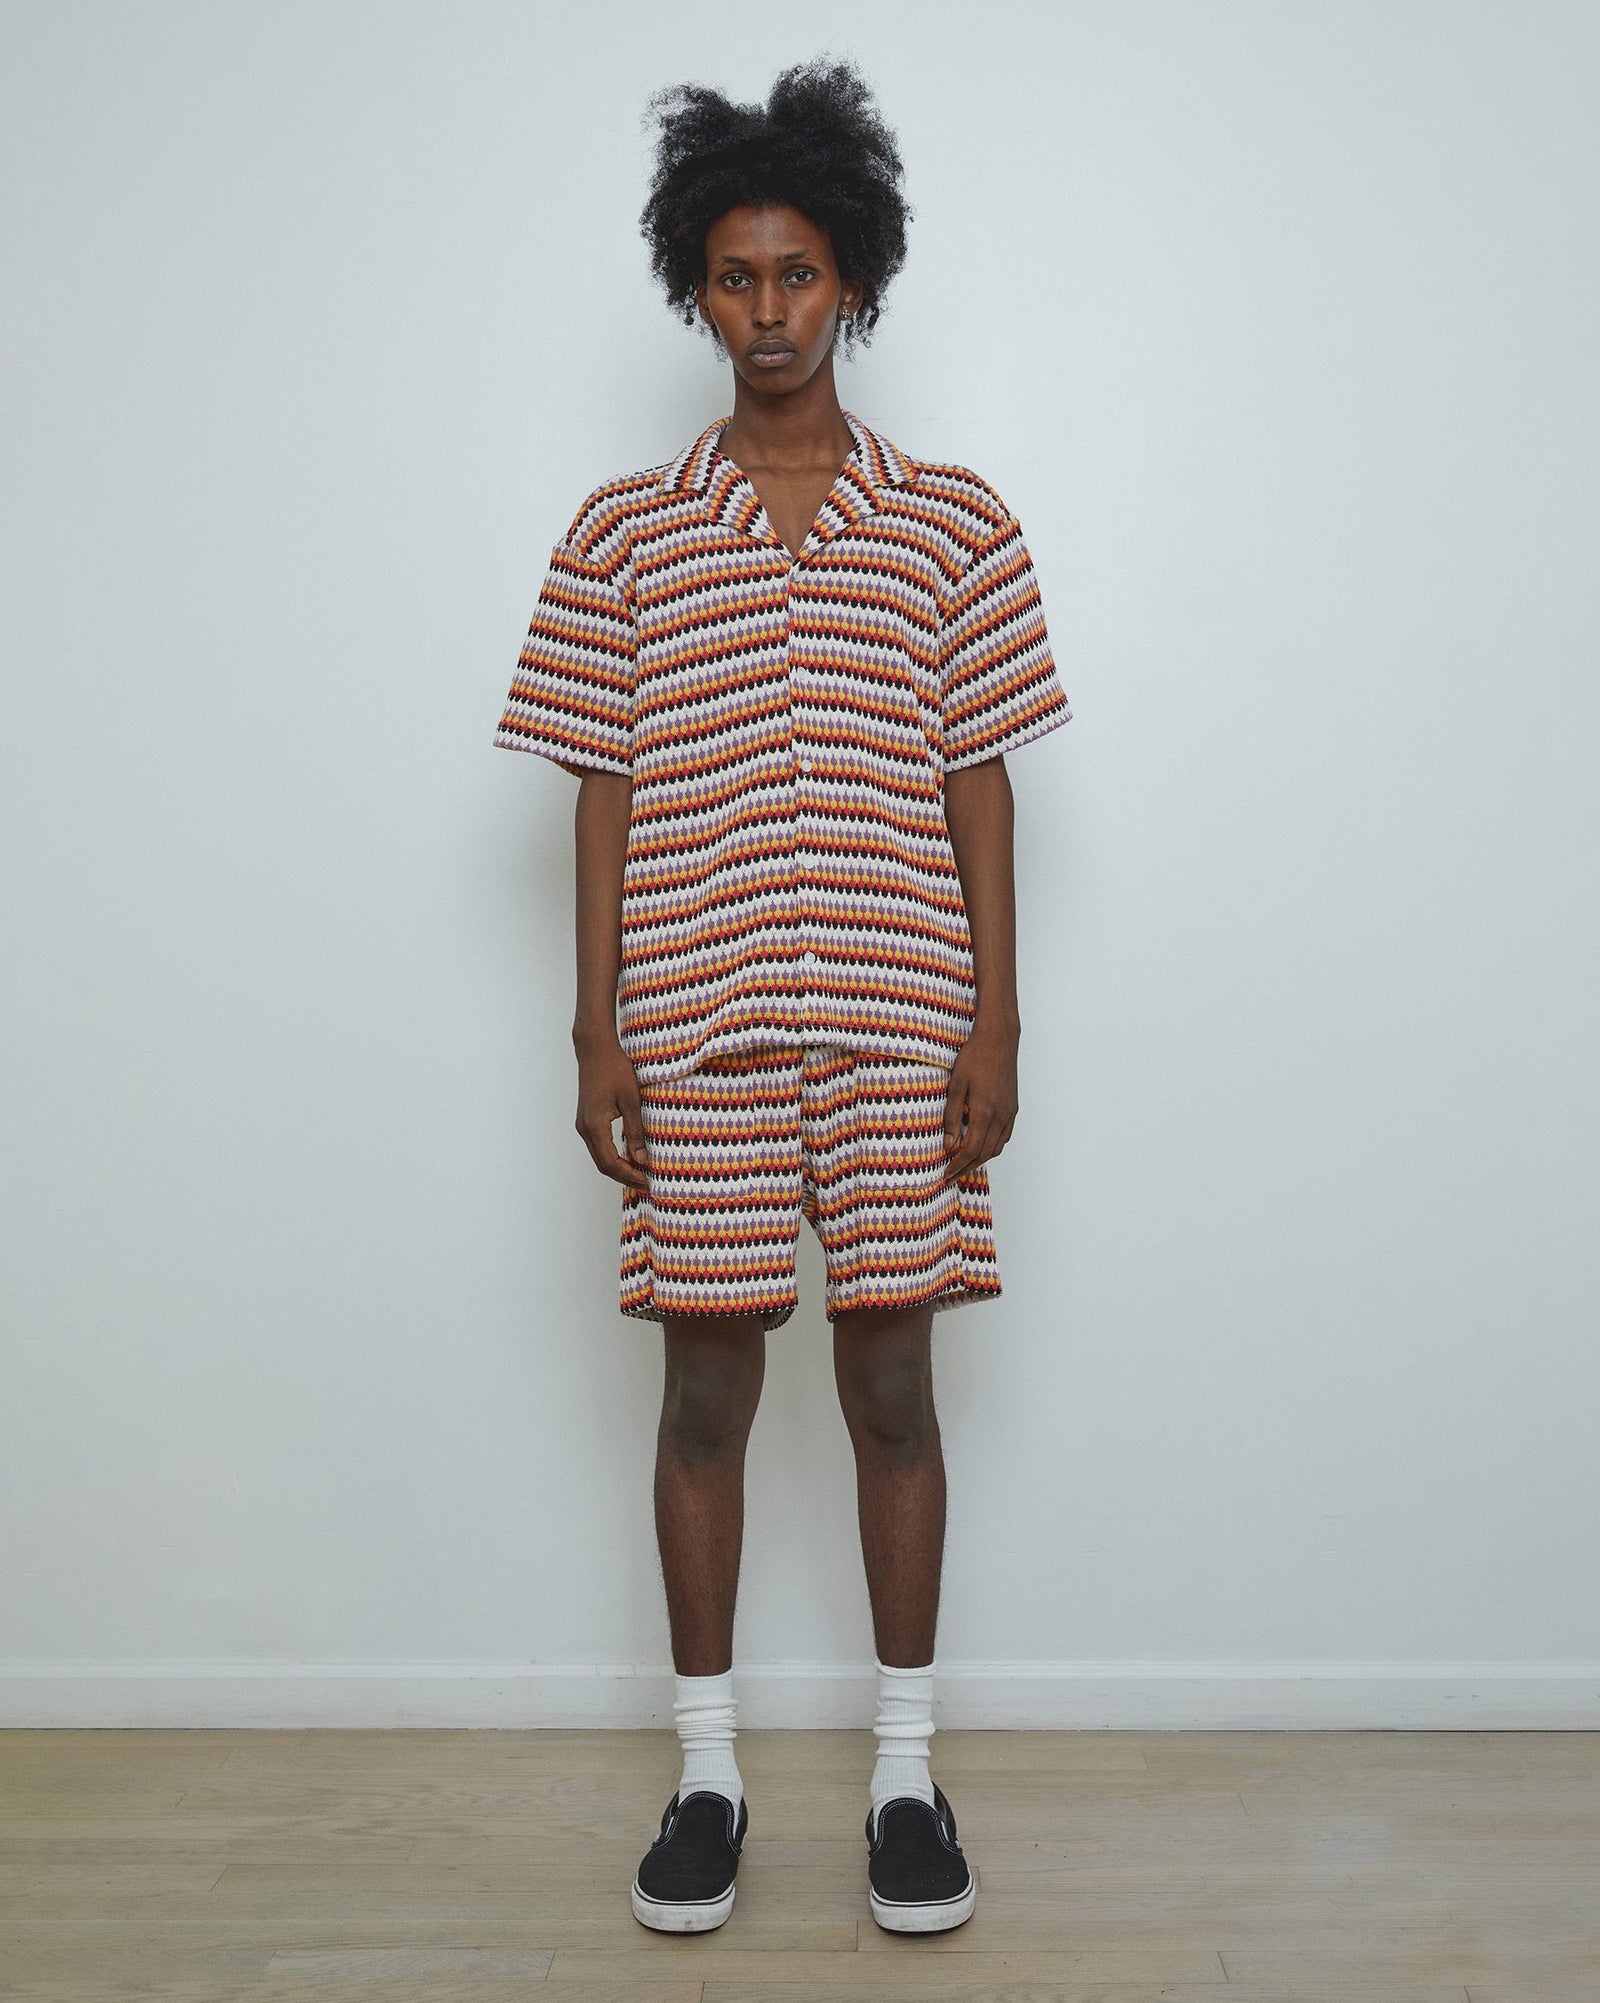 Striped textured button down - unisex fashion tops for men & women by Krost.